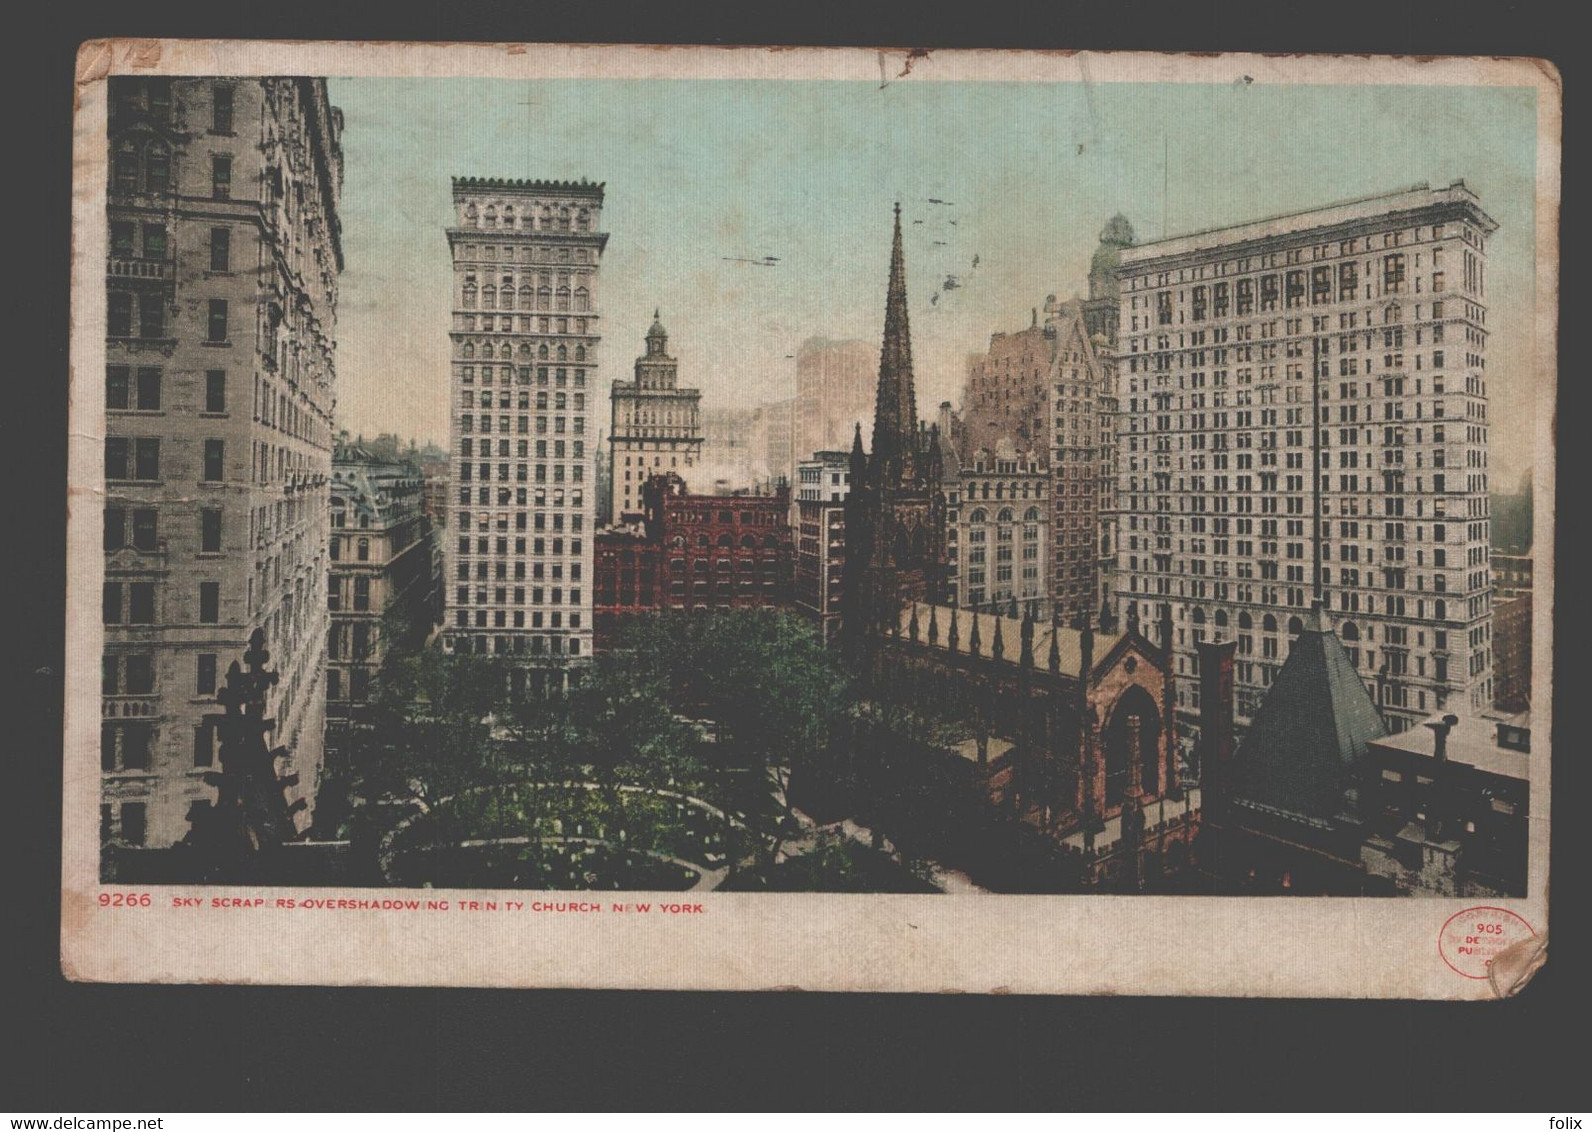 New York - Sky Scrapers Overshadowing Trinity Church - 1908 - Panoramic Views